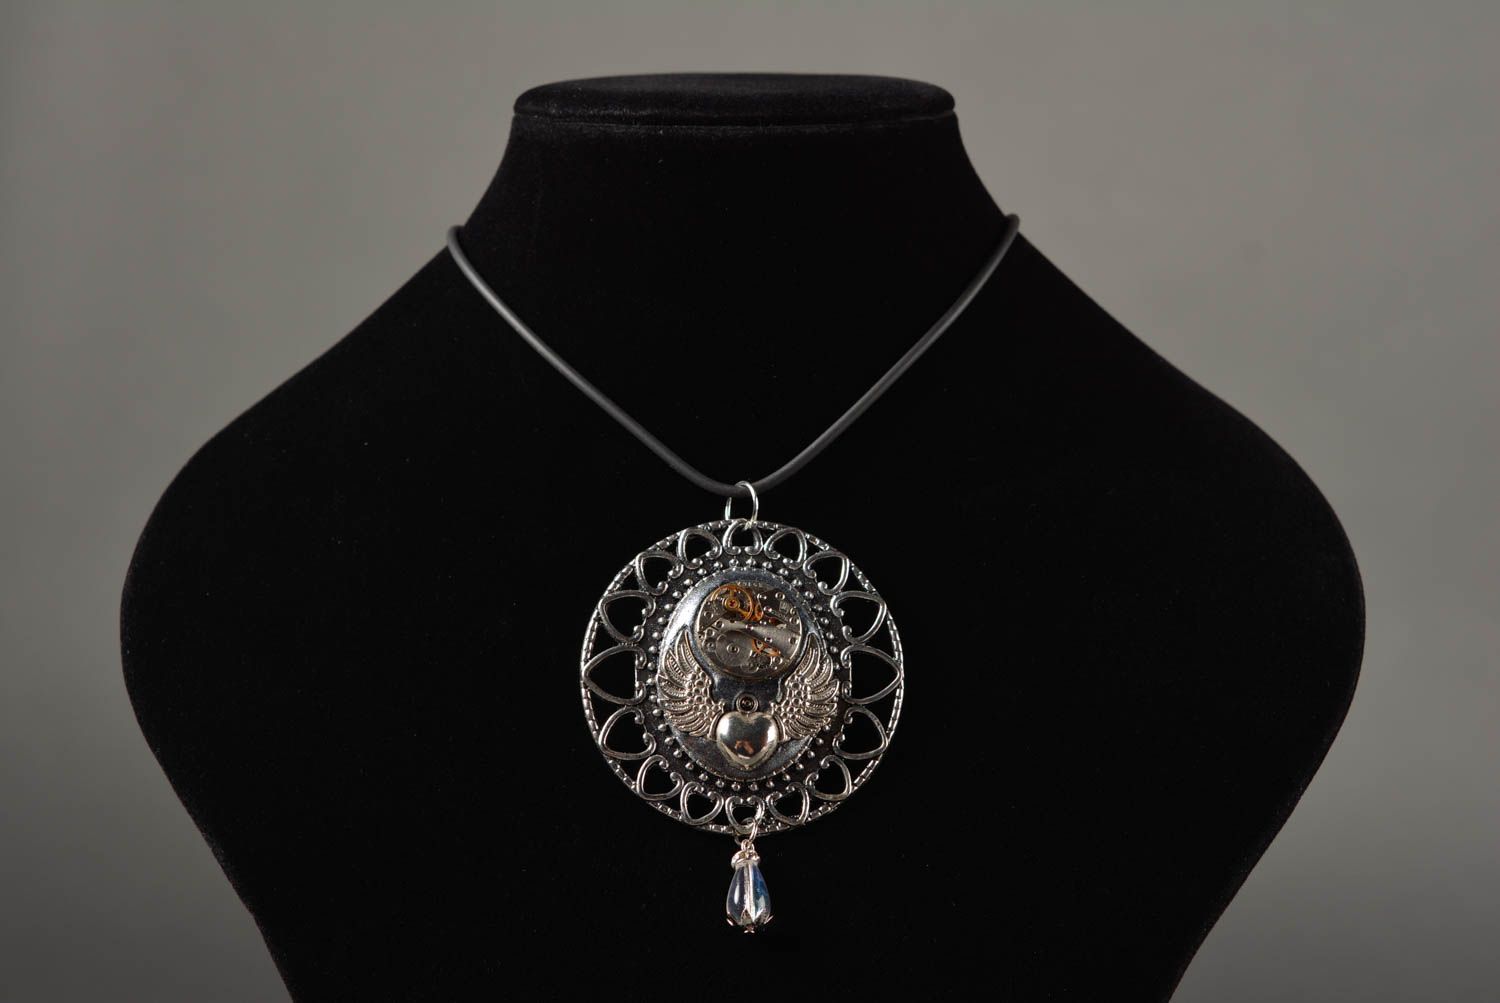 Stylish handmade metal neck pendant cool jewelry designs fashion trends photo 2